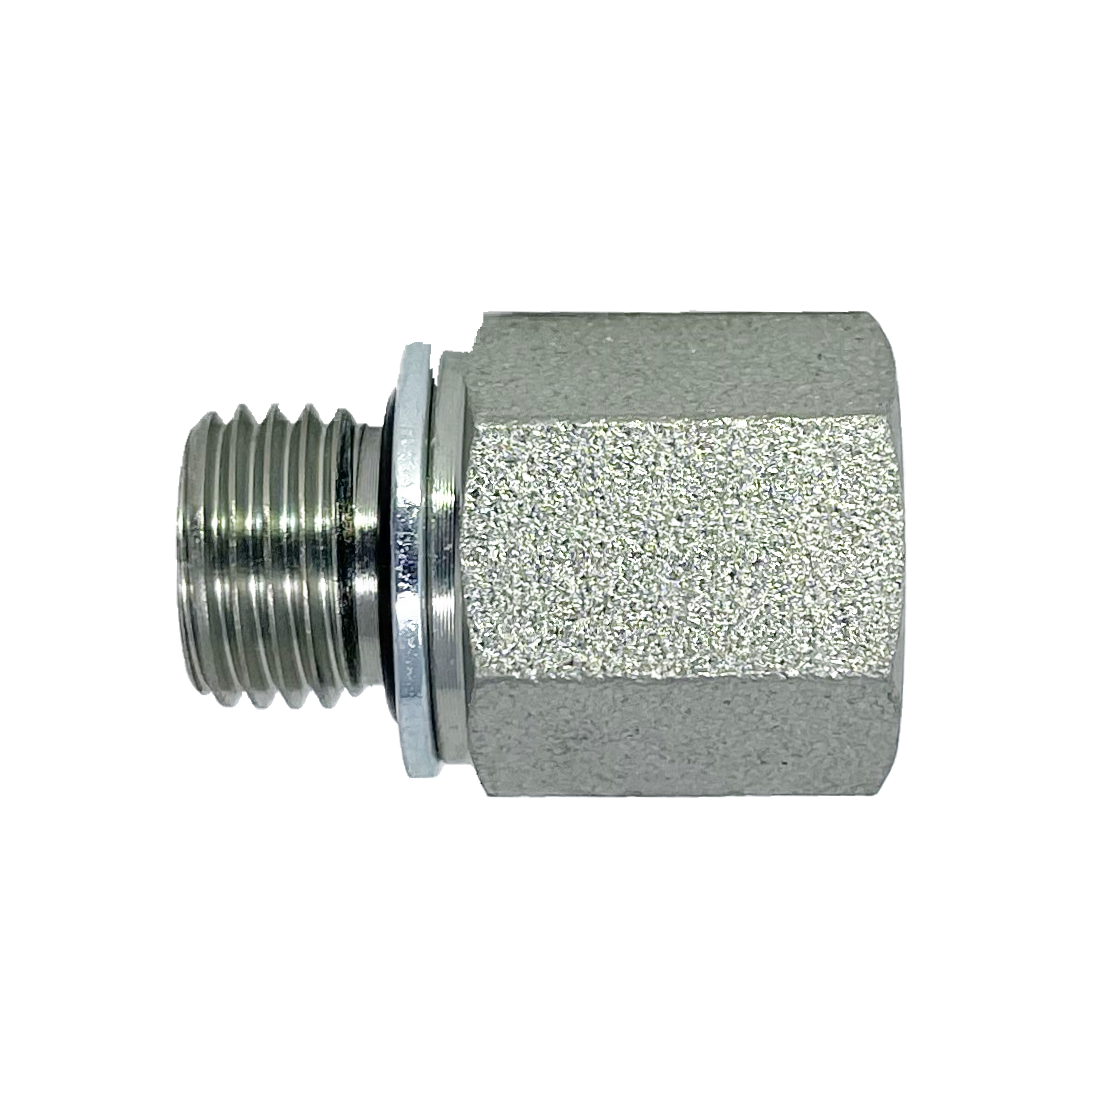 9635S-14-L08-06 : Adaptall Straight Adapter, Male L08 DIN Tube x Female 0.375 (3/8") NPT, Carbon Steel